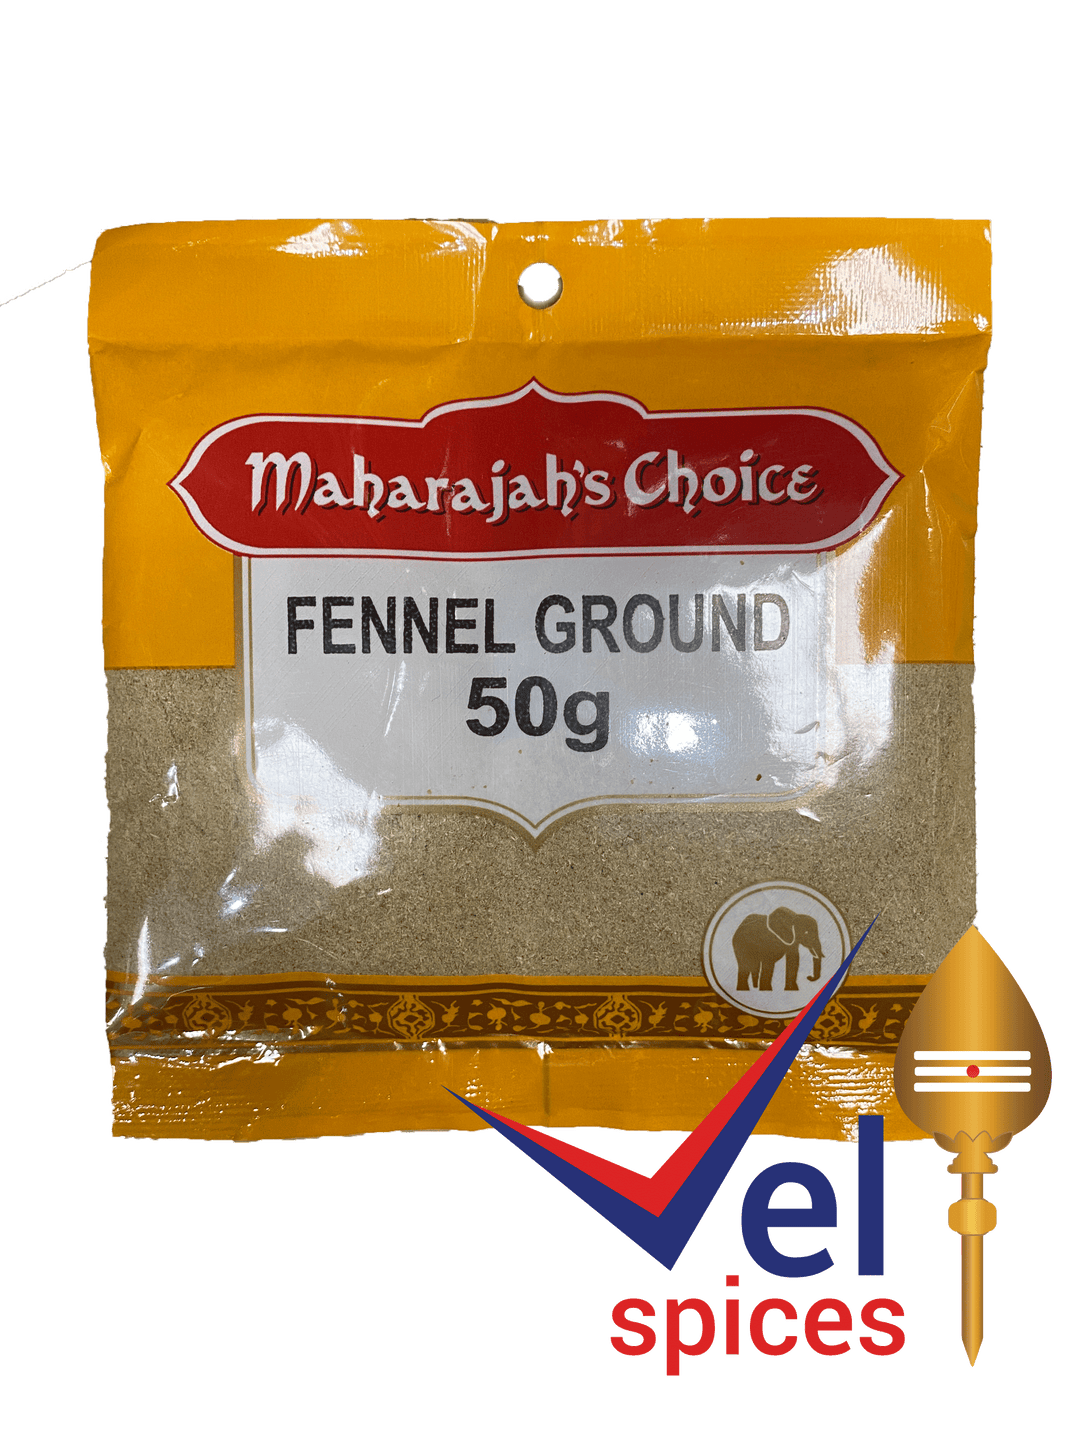 Maharajah's Fennel Powder